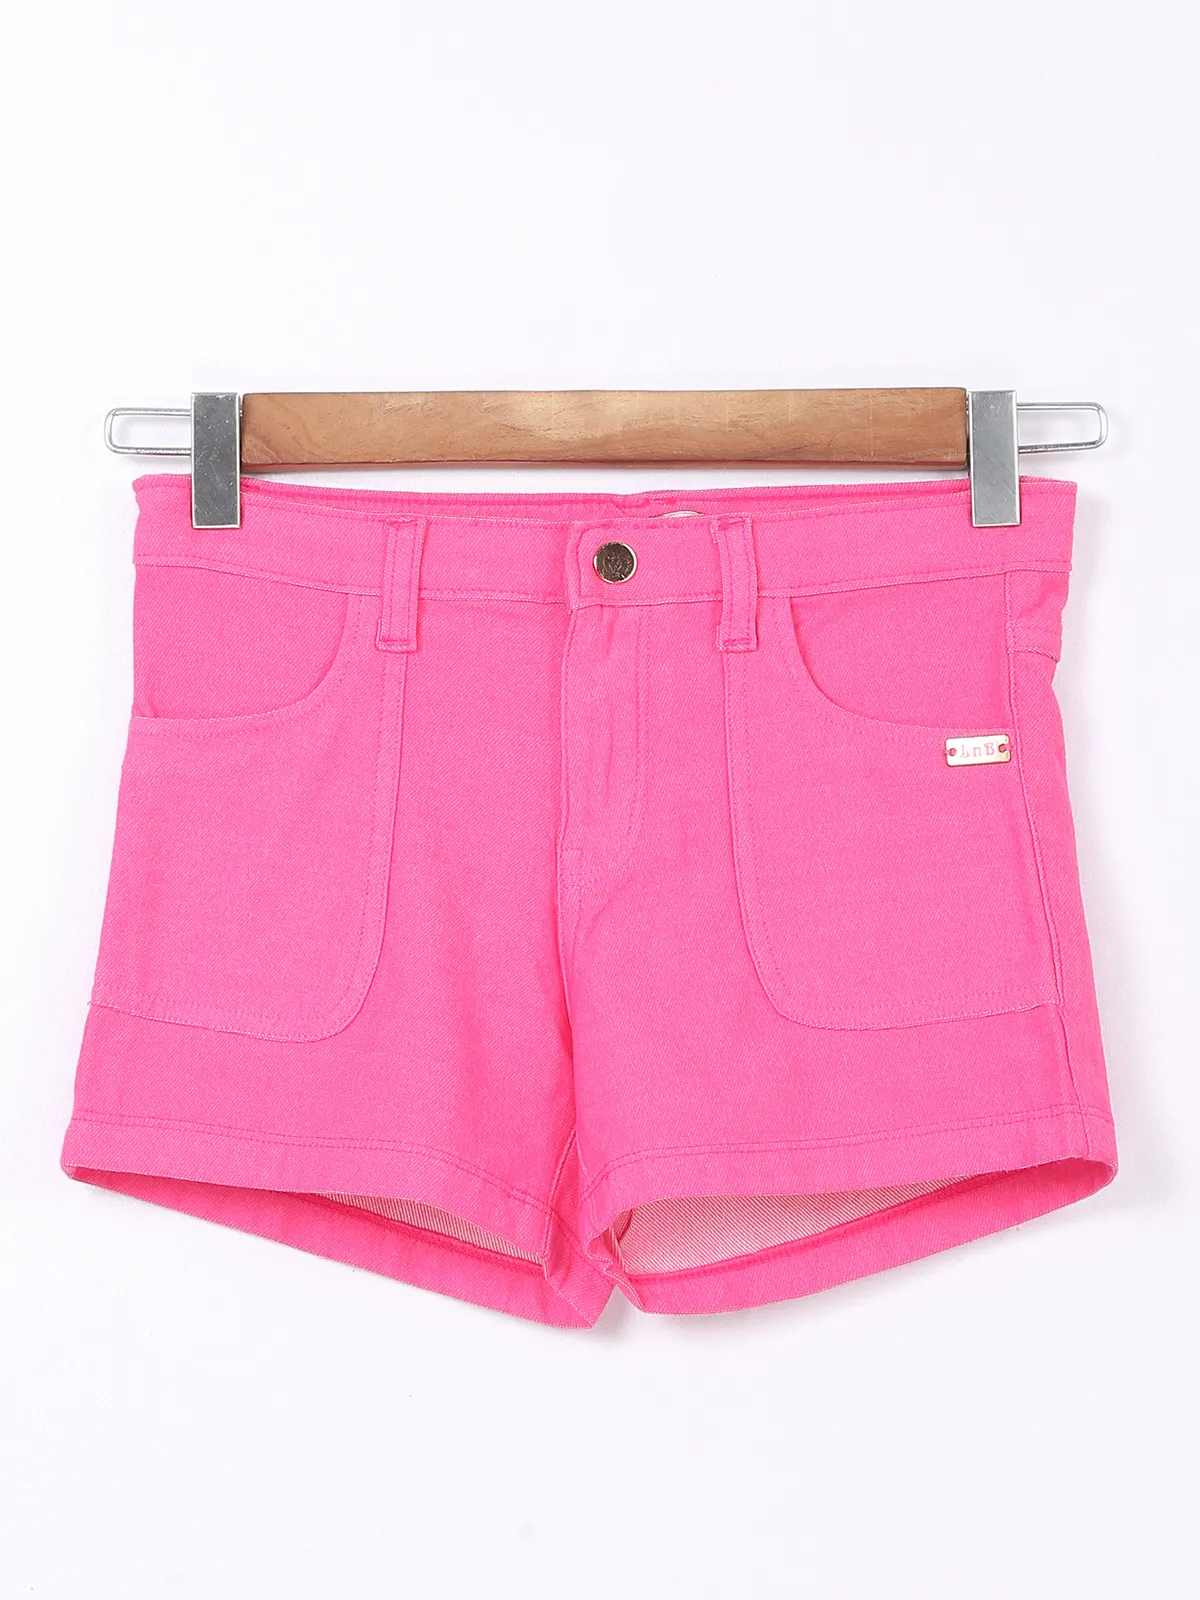 Leo n Babes solid pink denim shorts